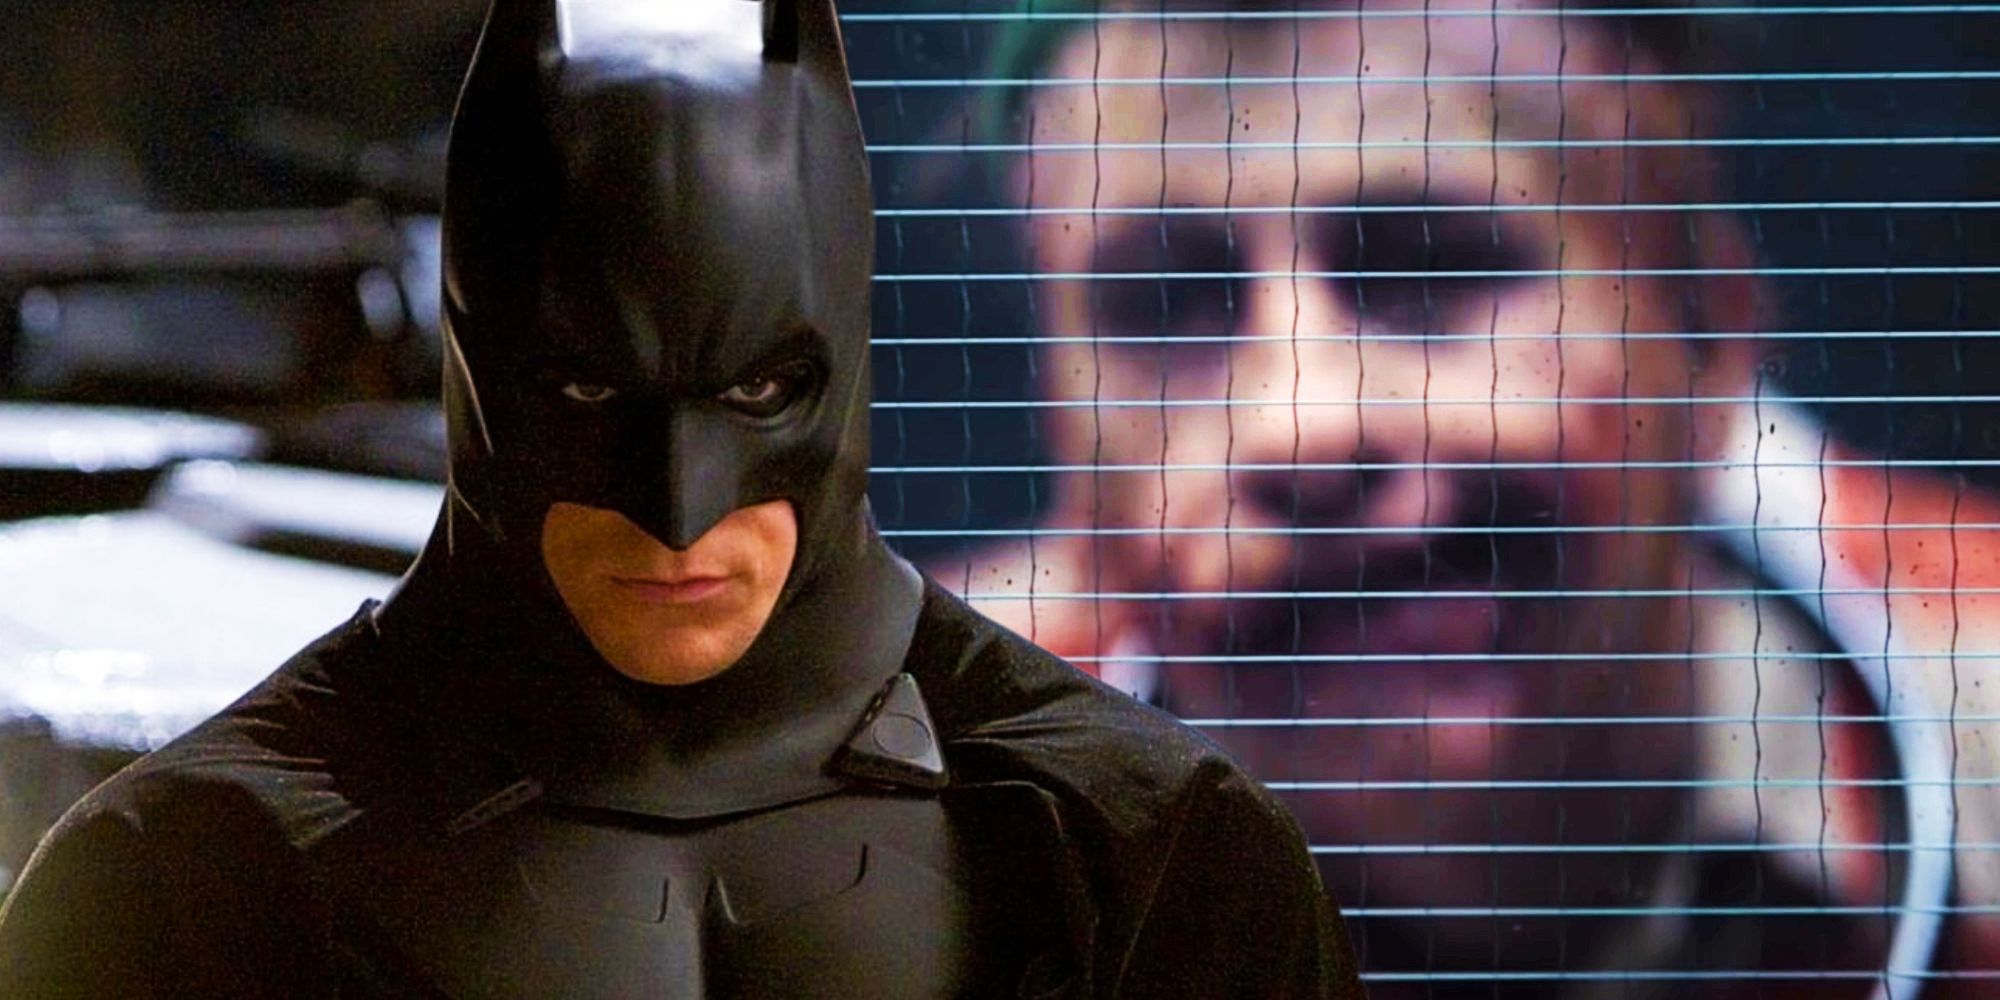 Christian Bale as Batman in Batman Begins and Barry Keoghan as the Joker in The Batman's deleted scene